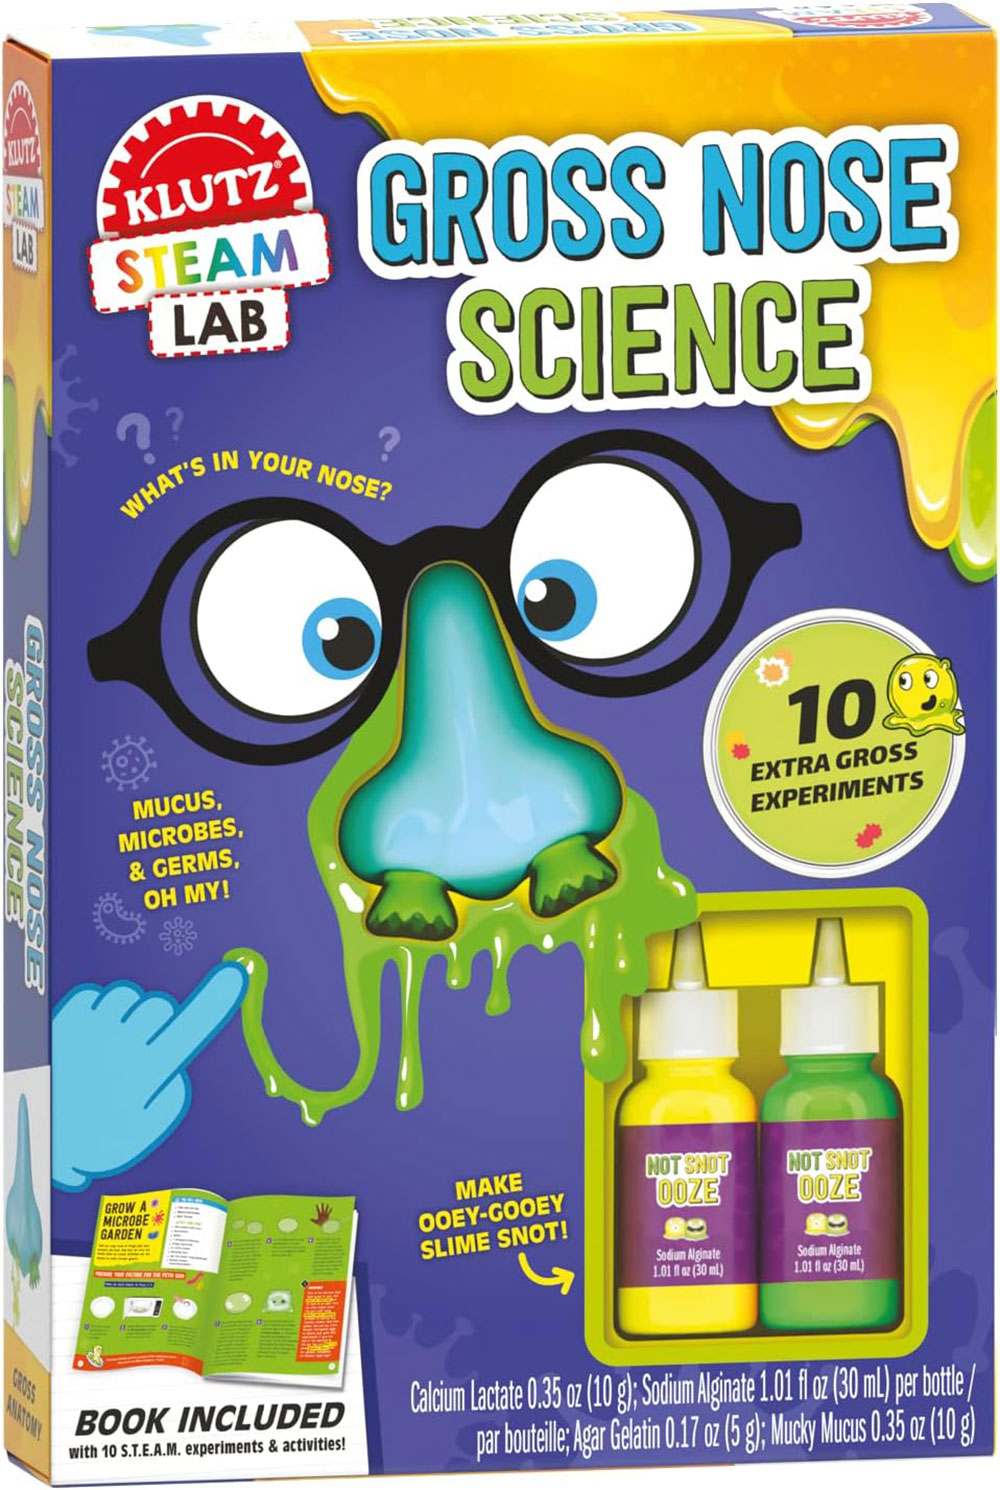 Box art for the Gross Nose Science kit